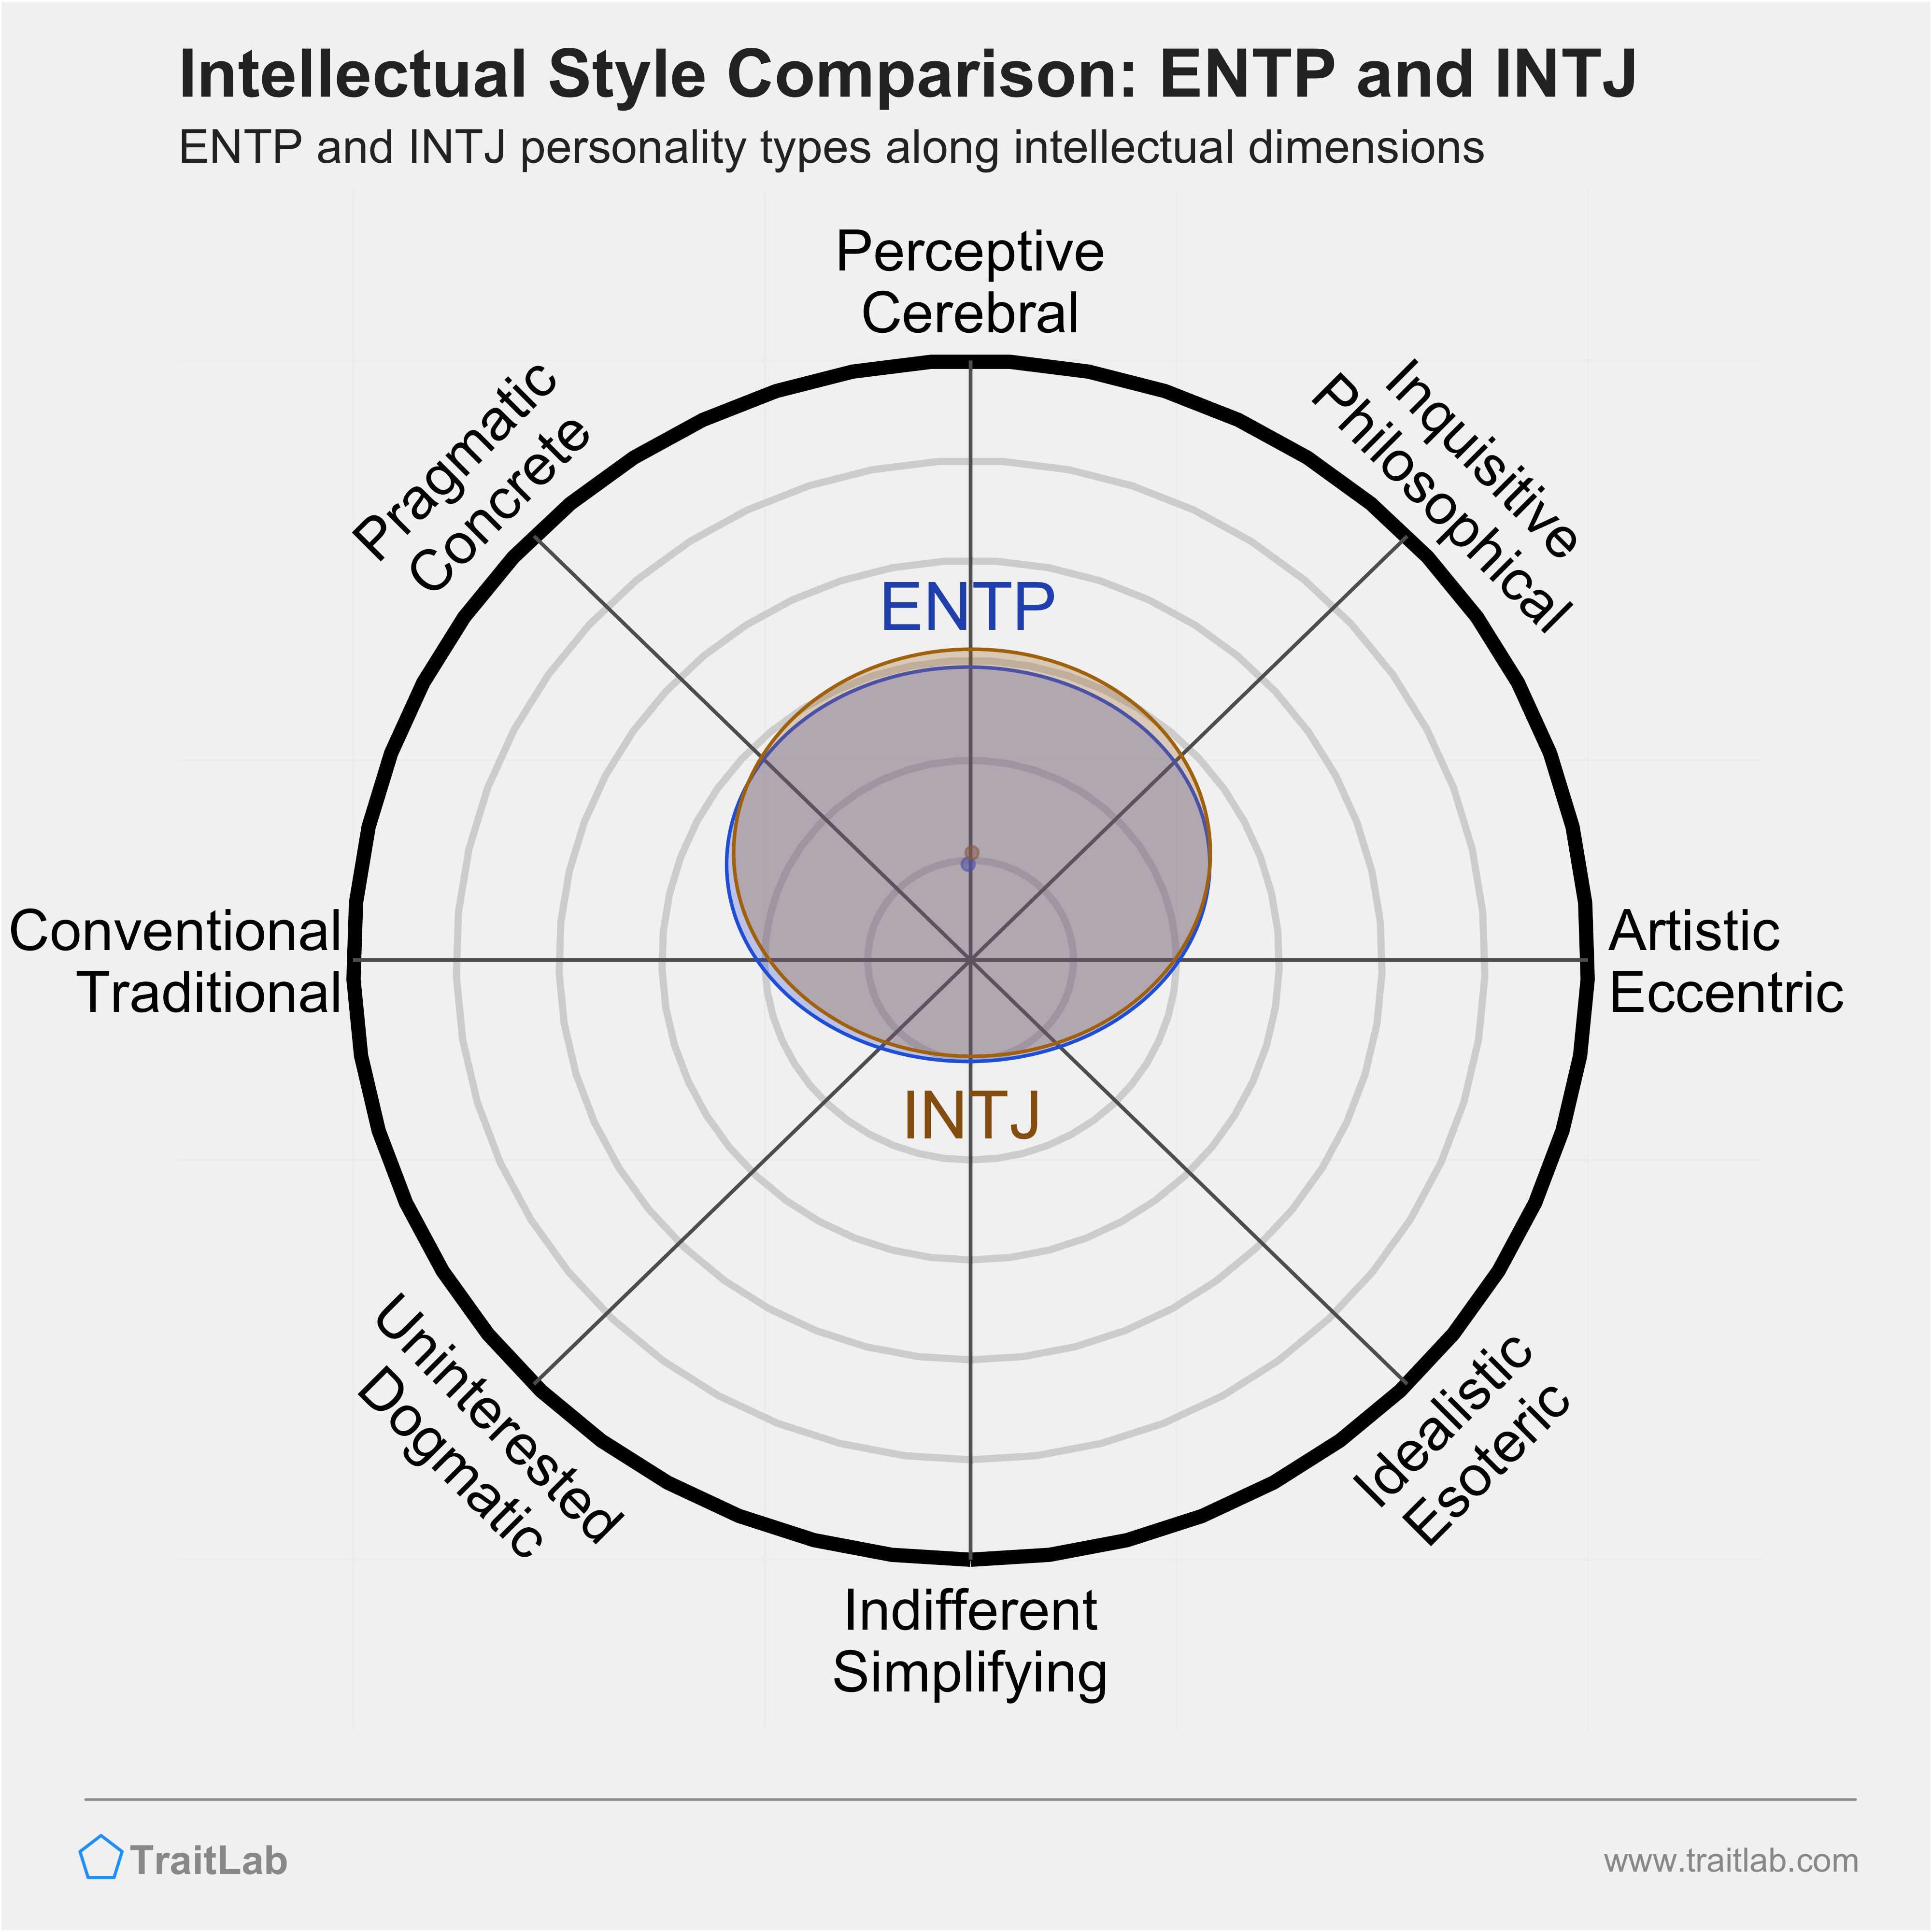 ENTP and INTJ comparison across intellectual dimensions